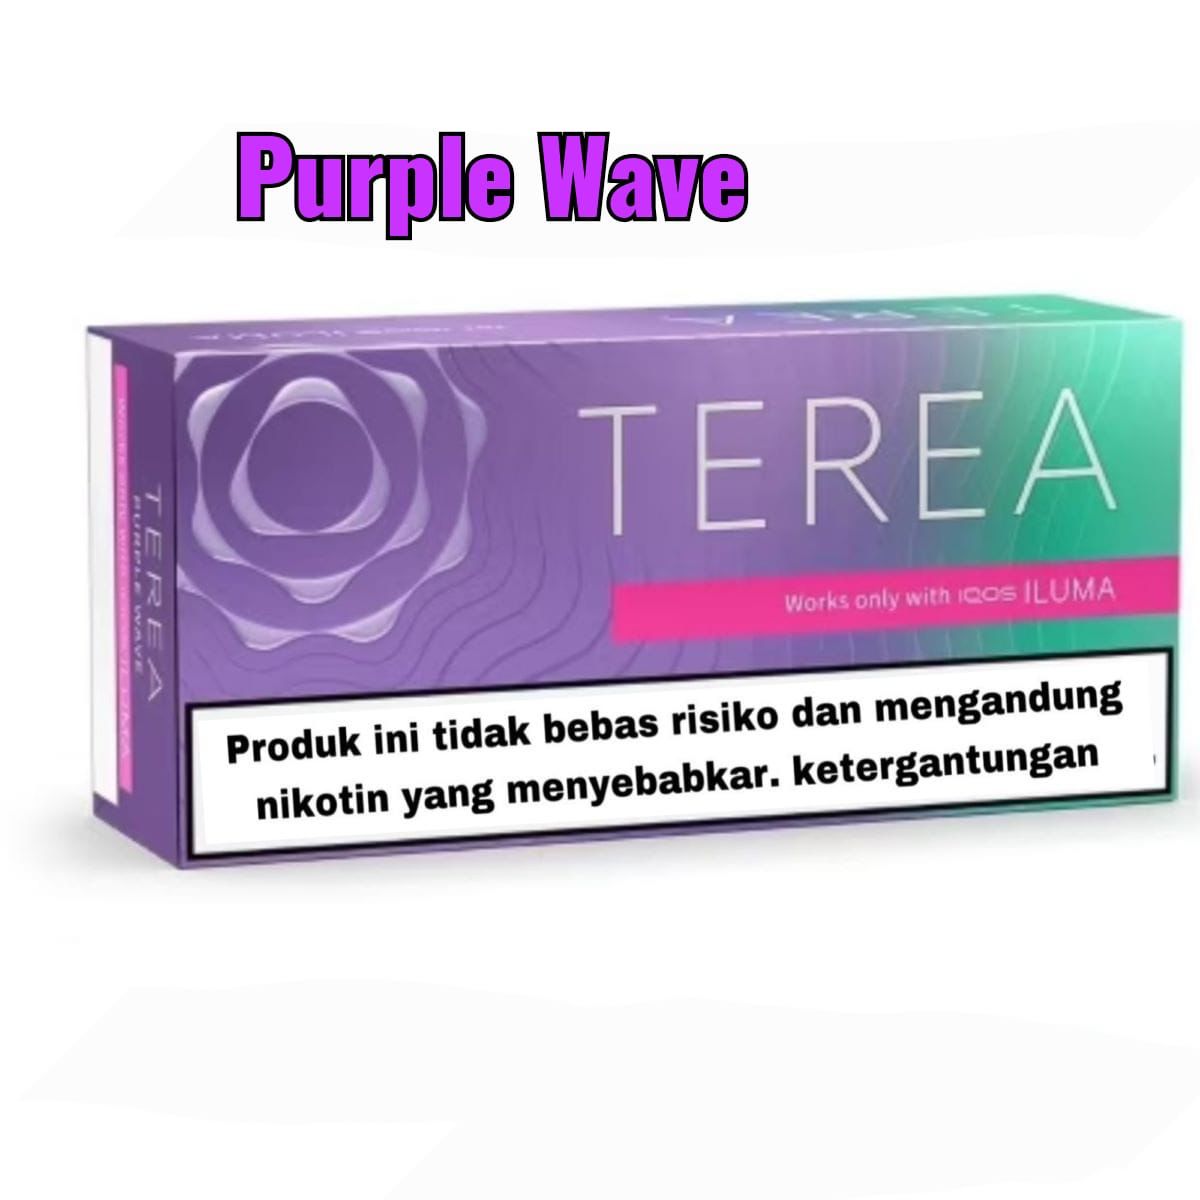 New IQOS Terea Purple Wave Indonesian